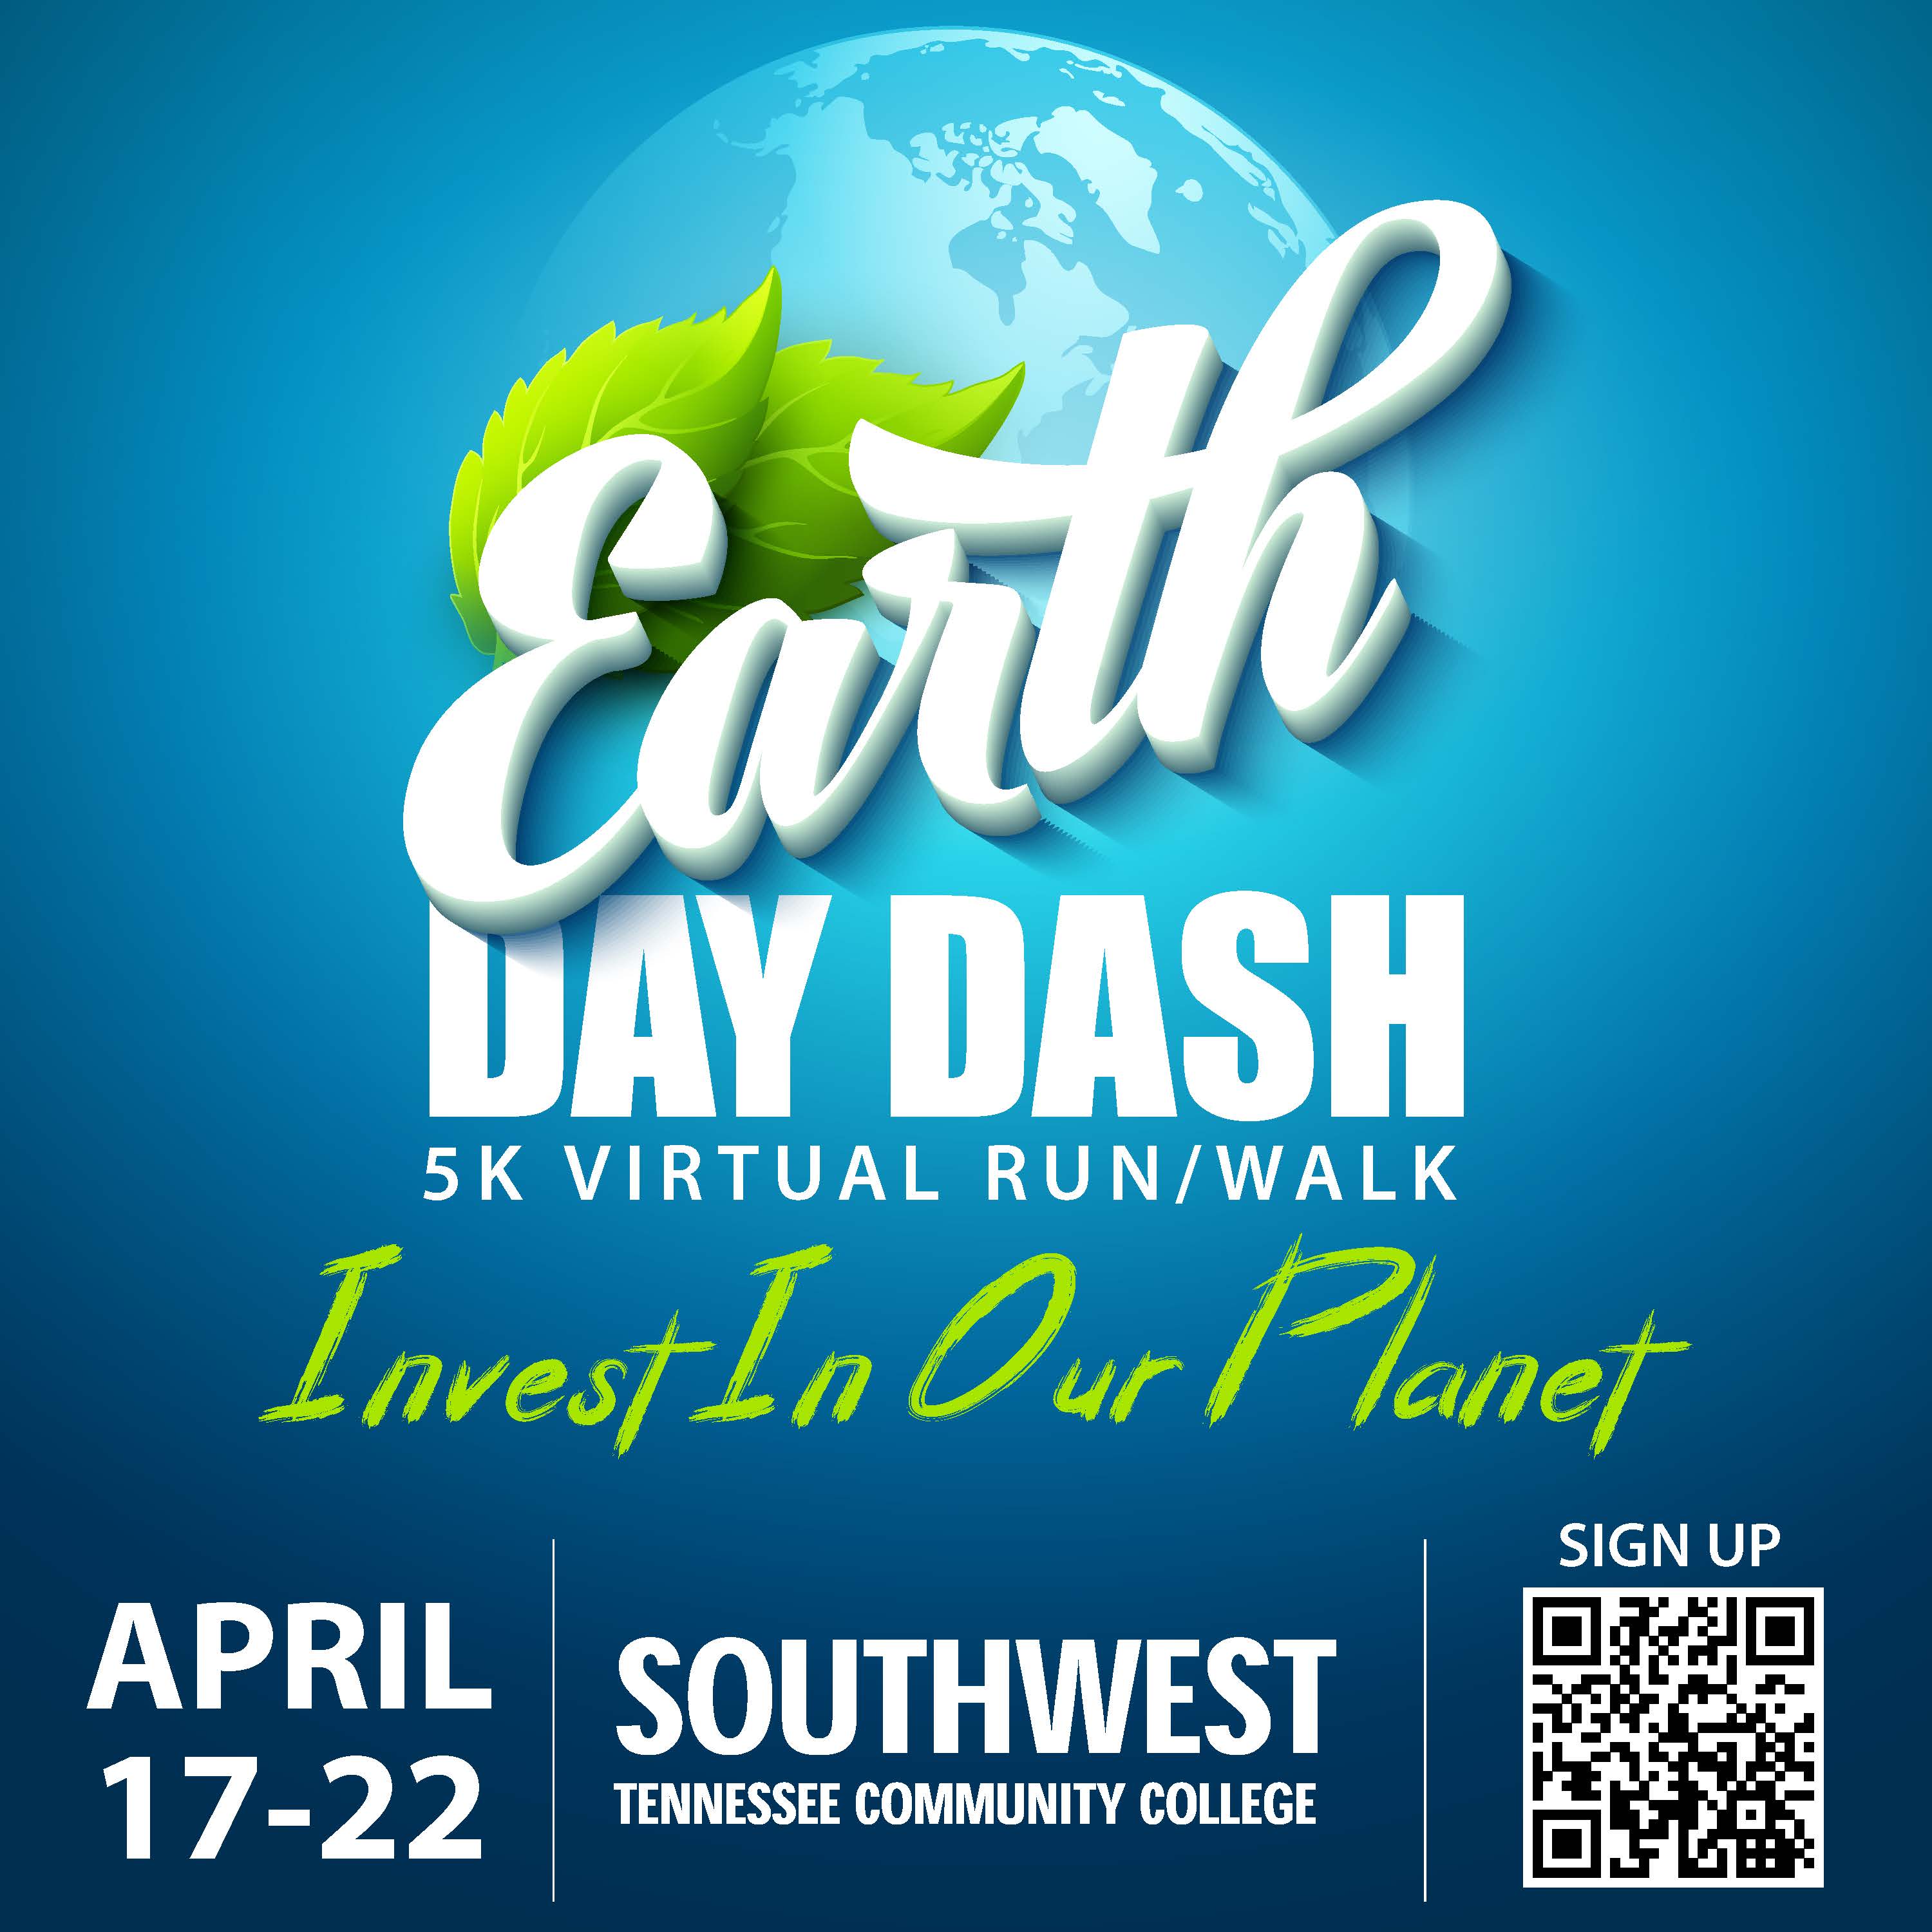 Earth Day Dash